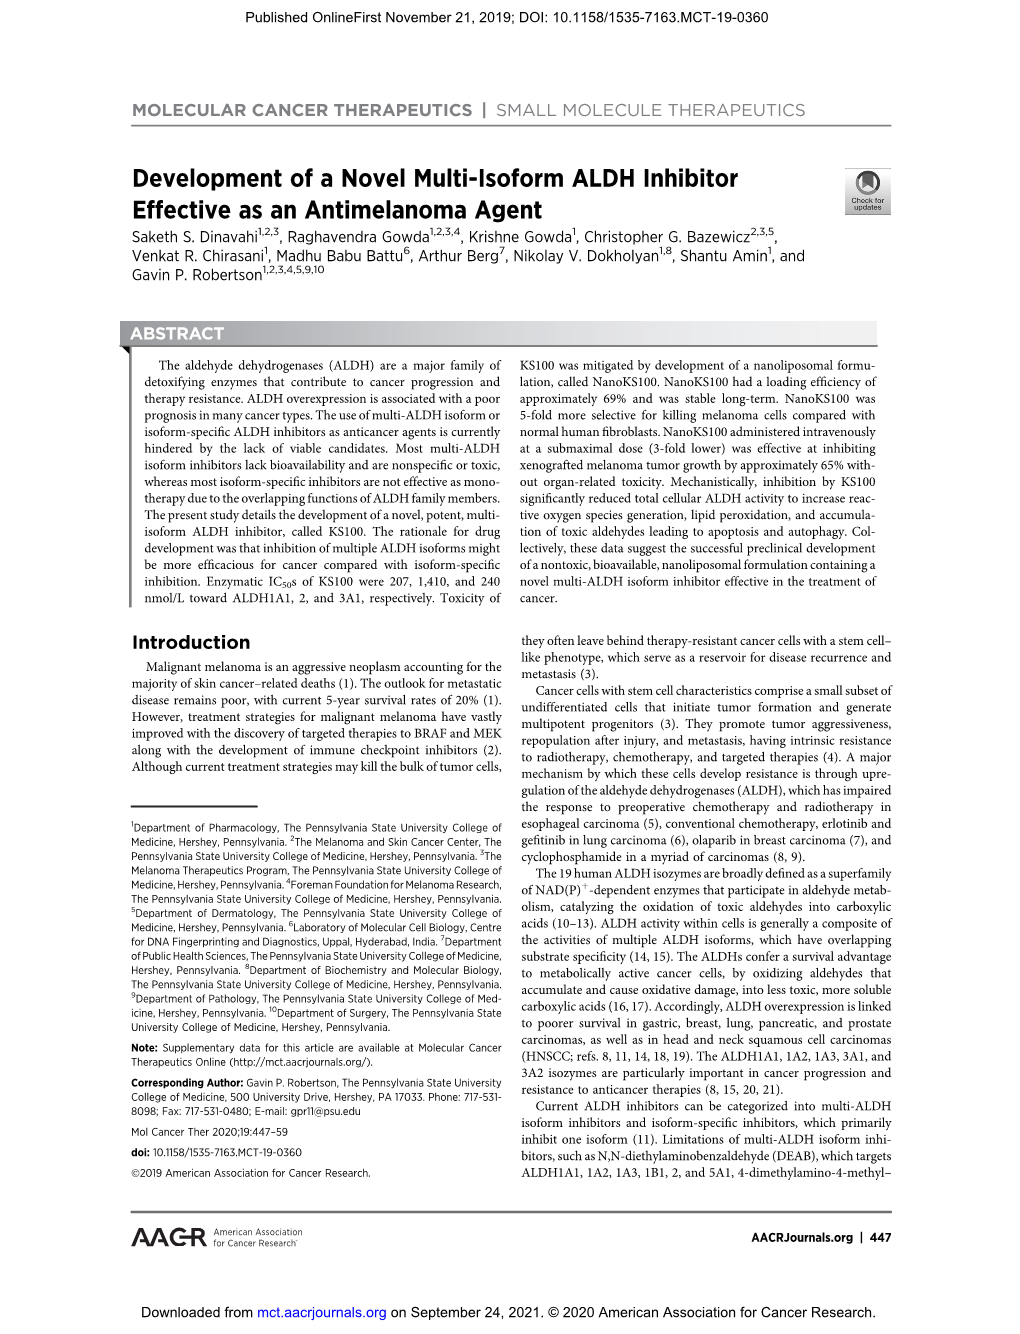 Development of a Novel Multi-Isoform ALDH Inhibitor Effective As an Antimelanoma Agent Saketh S